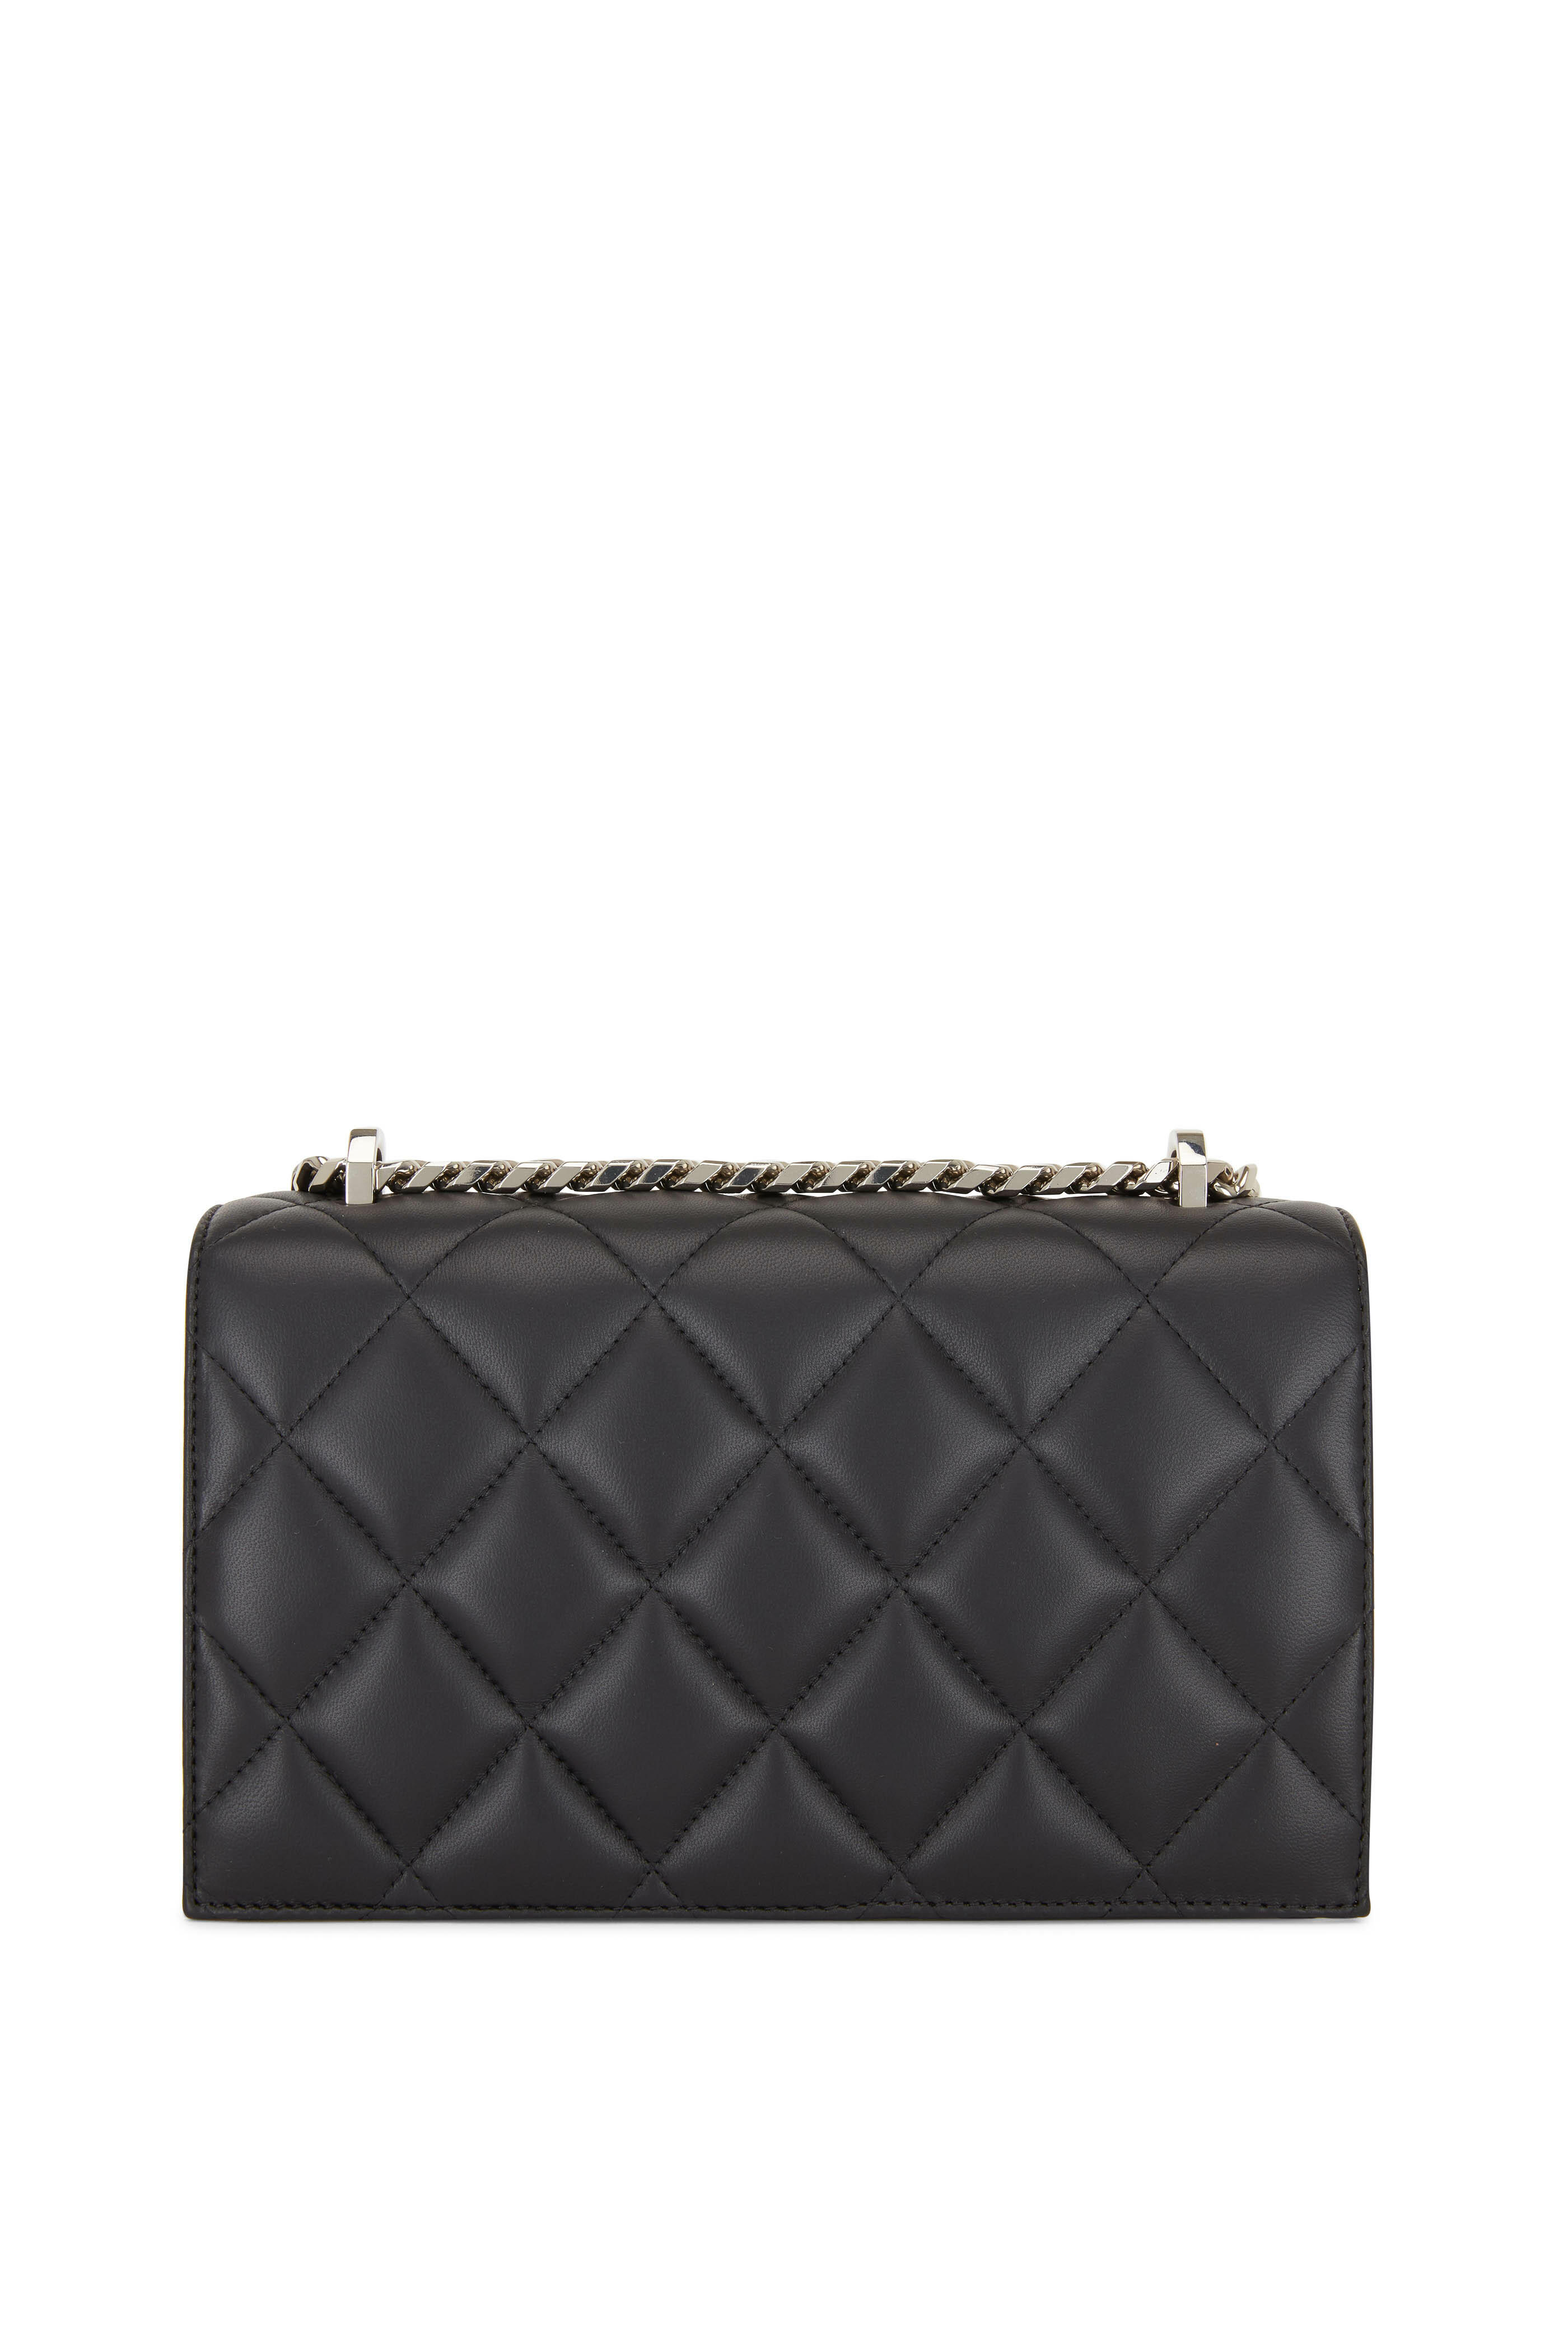 Black Quilted Leather With Swarovski Crystals Handbag